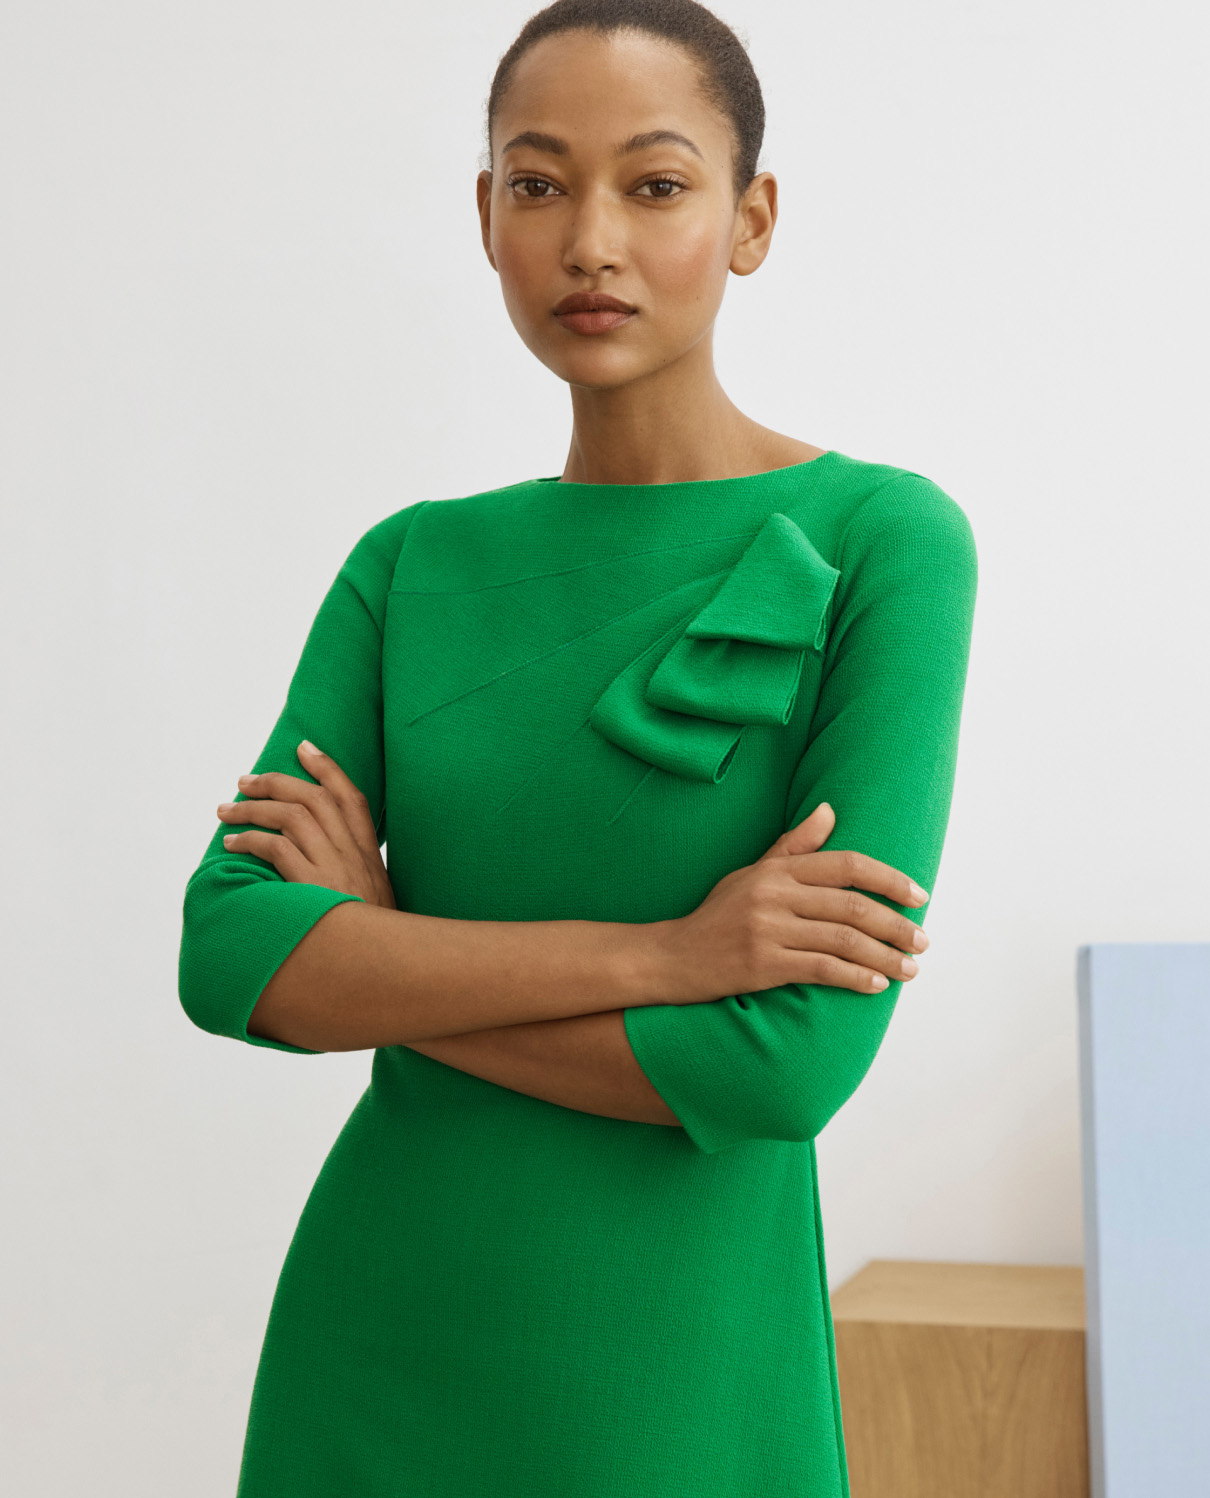 Model wearing emerald green Verana dress